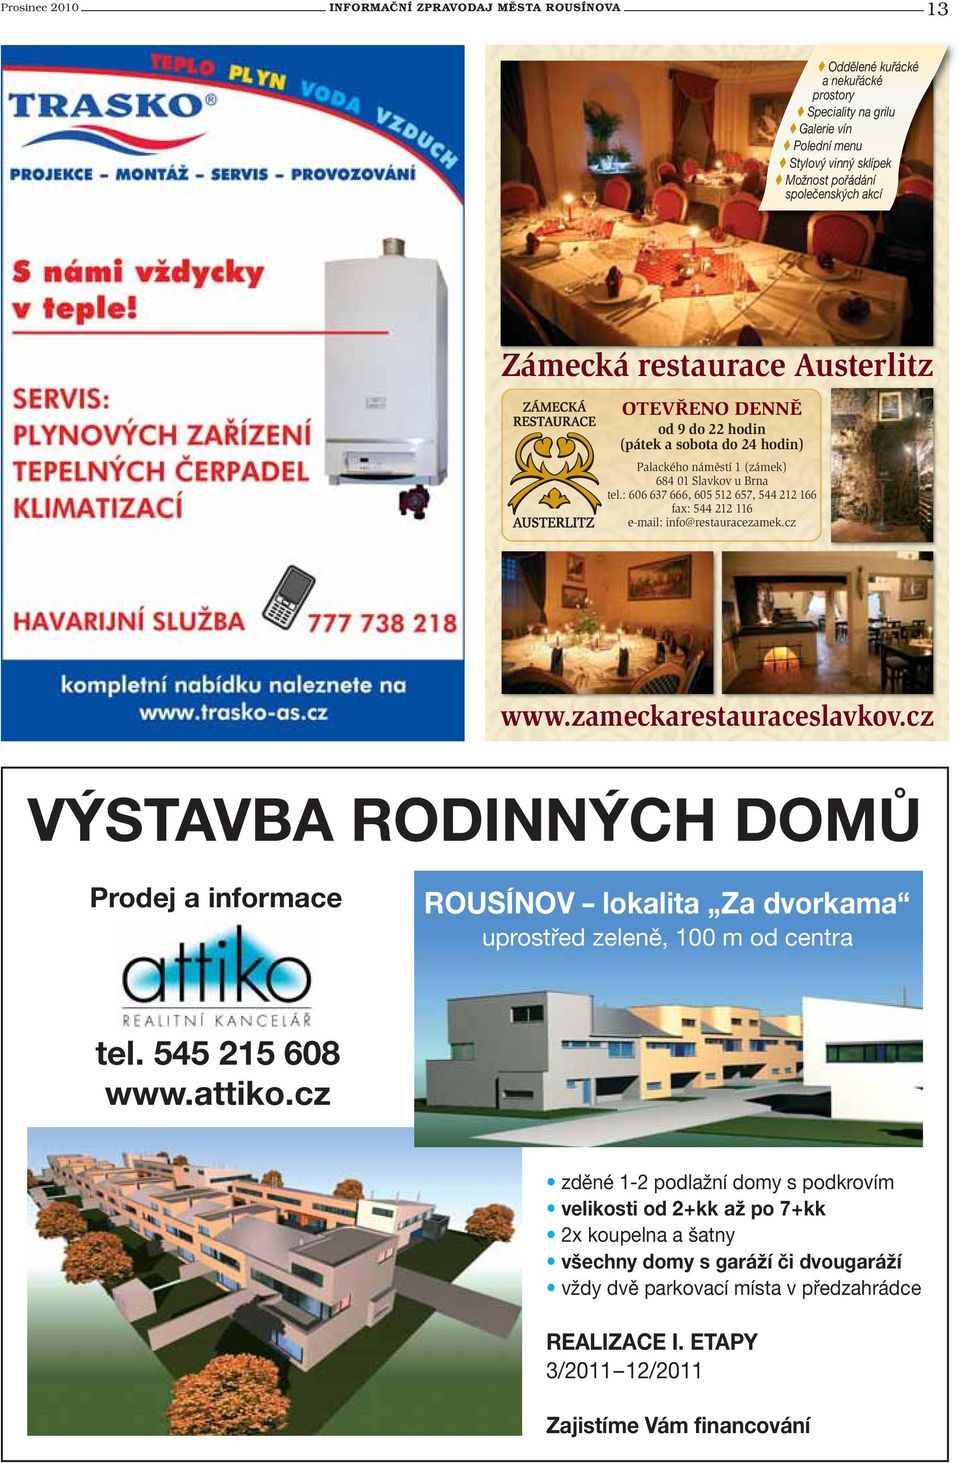 : 606 637 666, 605 512 657, 544 212 166 fax: 544 212 116 e-mail: info@restauracezamek.cz www.zameckarestauraceslavkov.